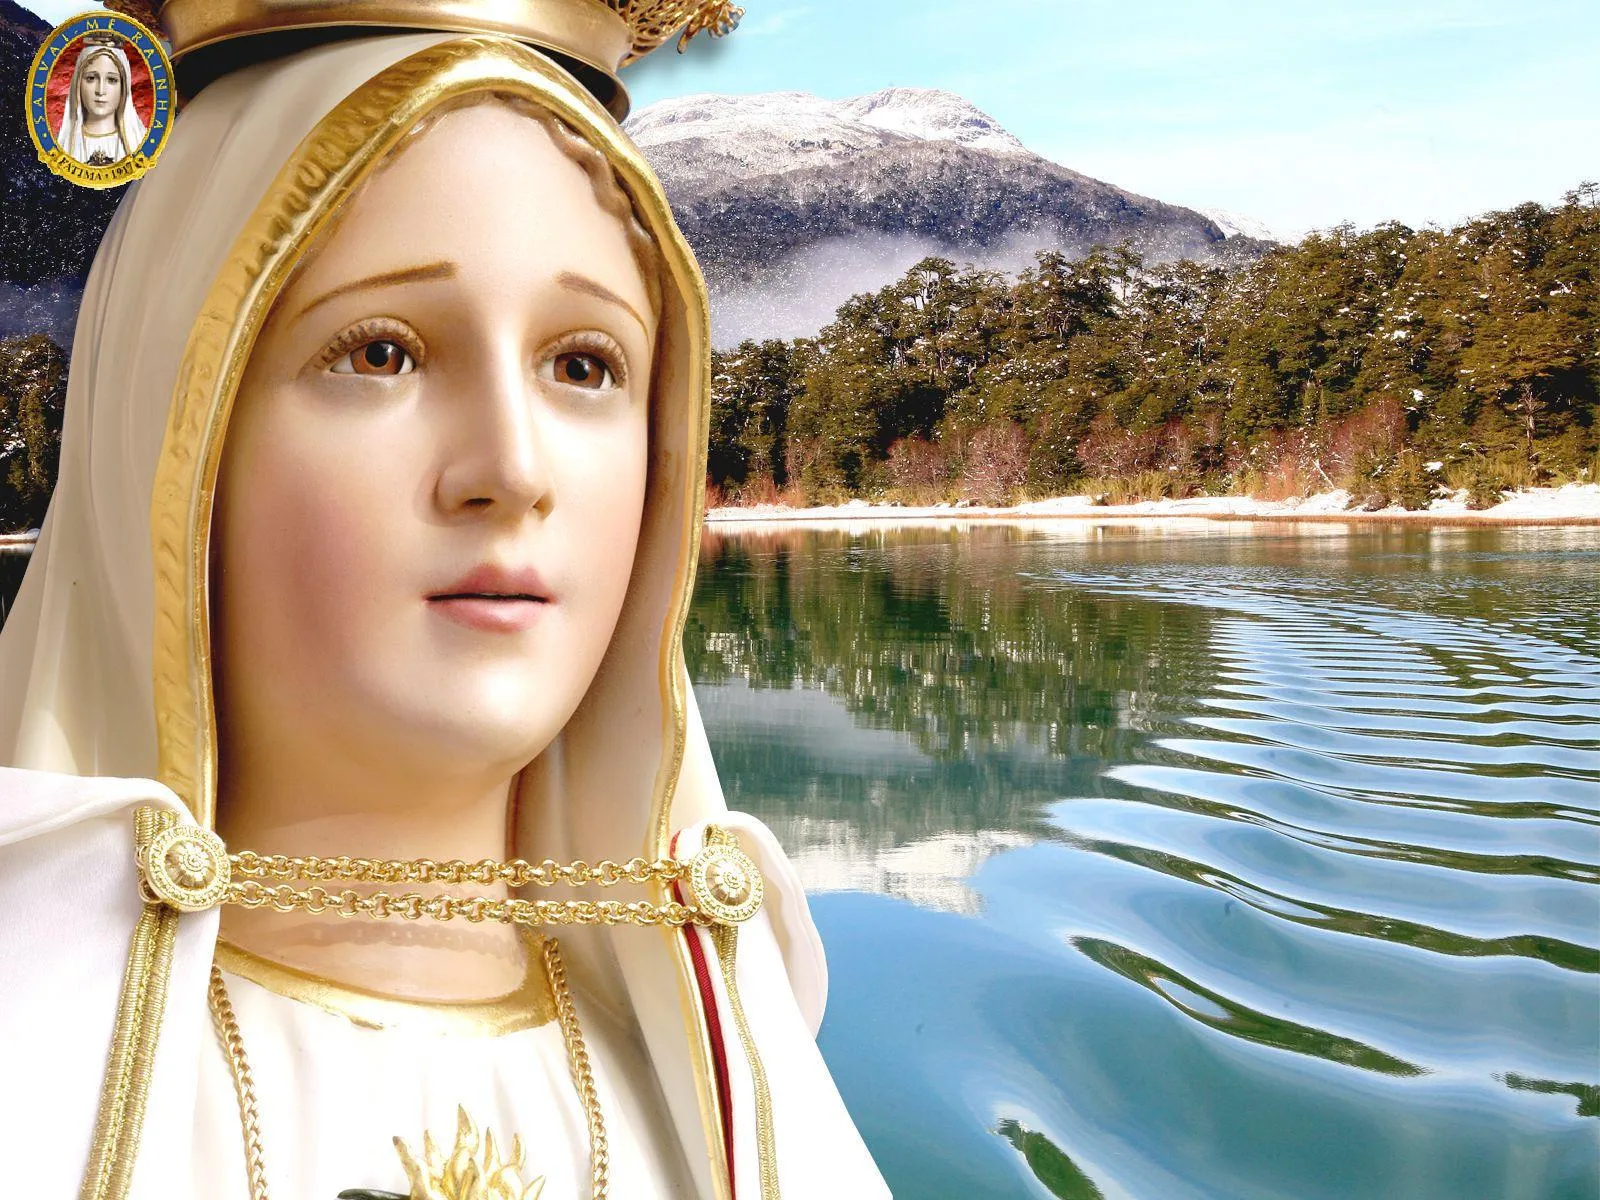 Fondos de pantalla Virgen María - Imagui